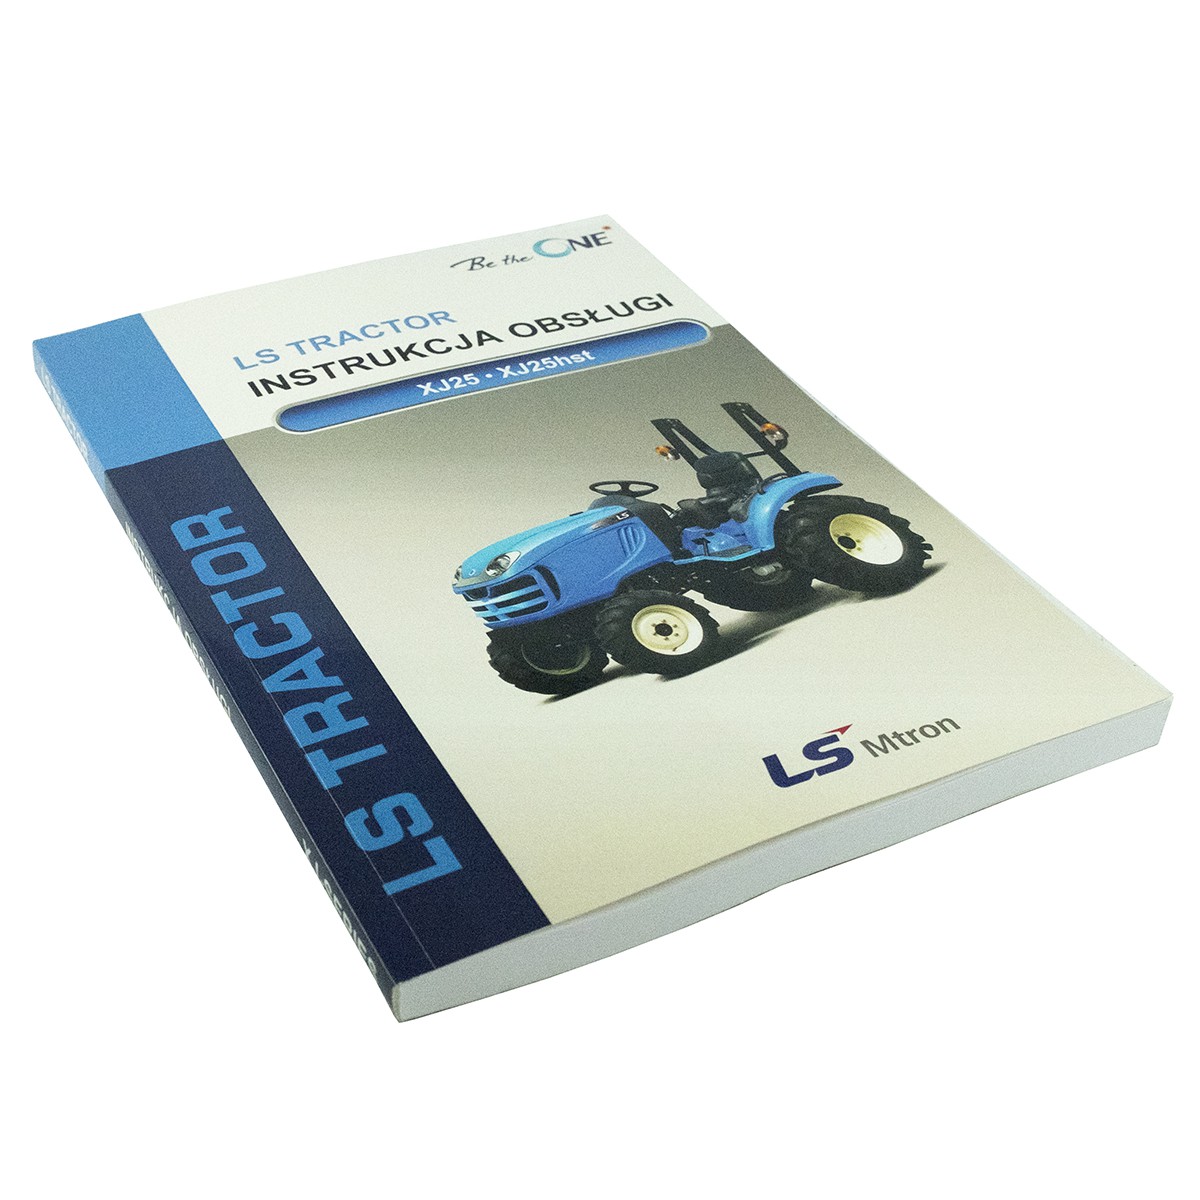 Manual del tractor LS Tractor XJ25 / LS Tractor XJ25 HST